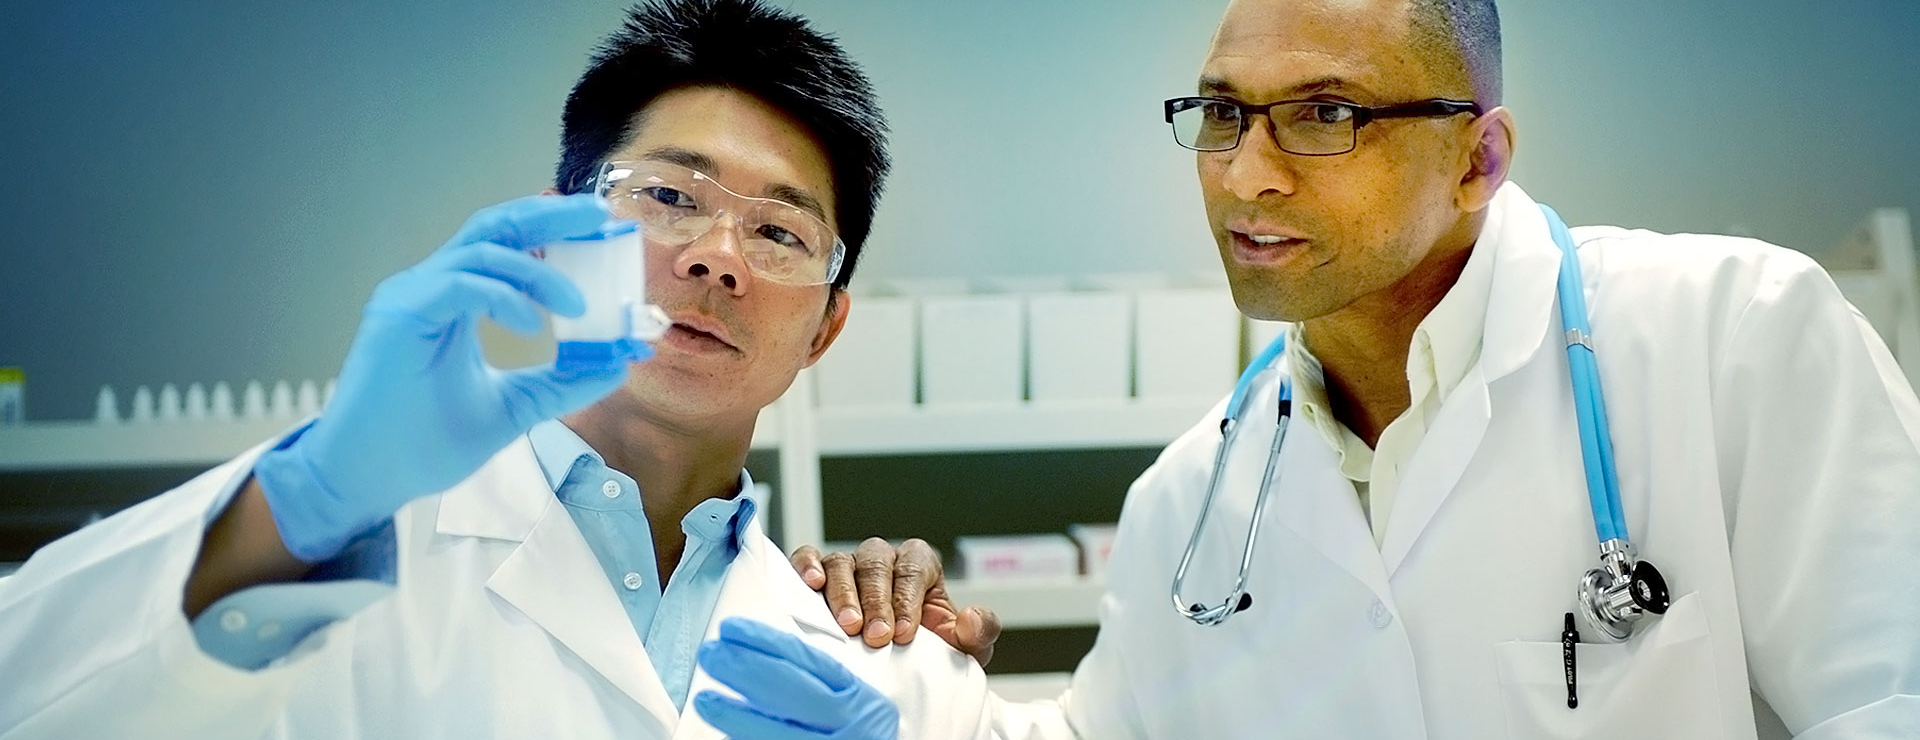 Scientists inspect a PCR test cartridge